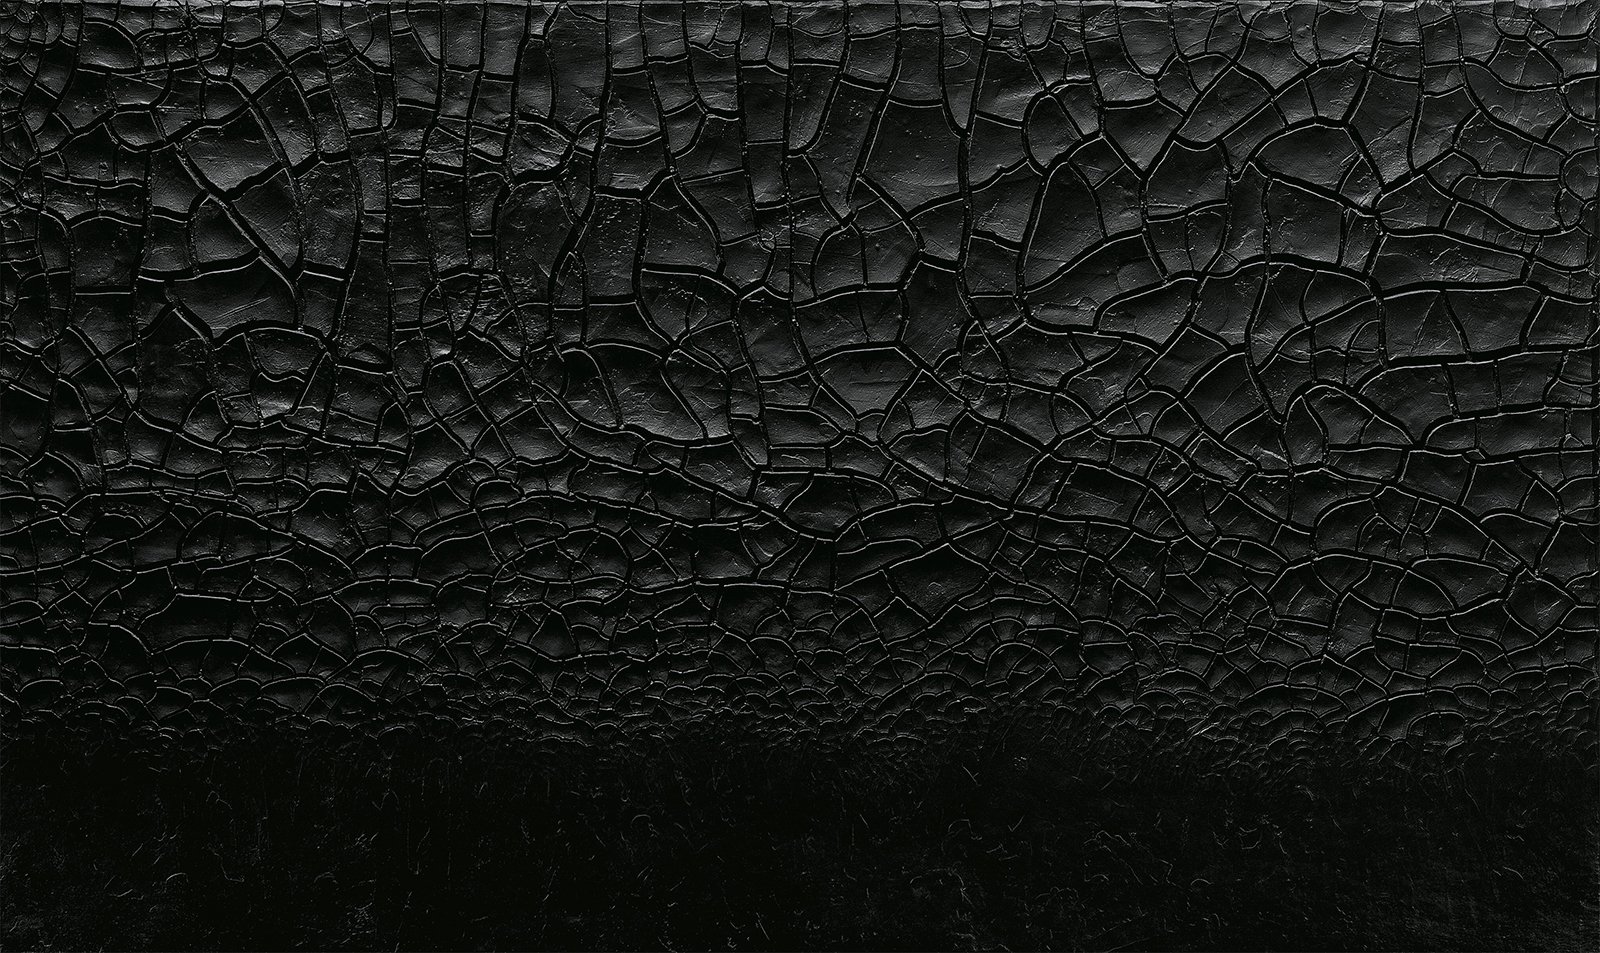 Альберто Бурри. Nero cretto (Чёрная трещина). 1976. Акрил и клей на Целотексе. 147.3 x 246.5 см. Предоставлено Luxembourg &amp; Dayan